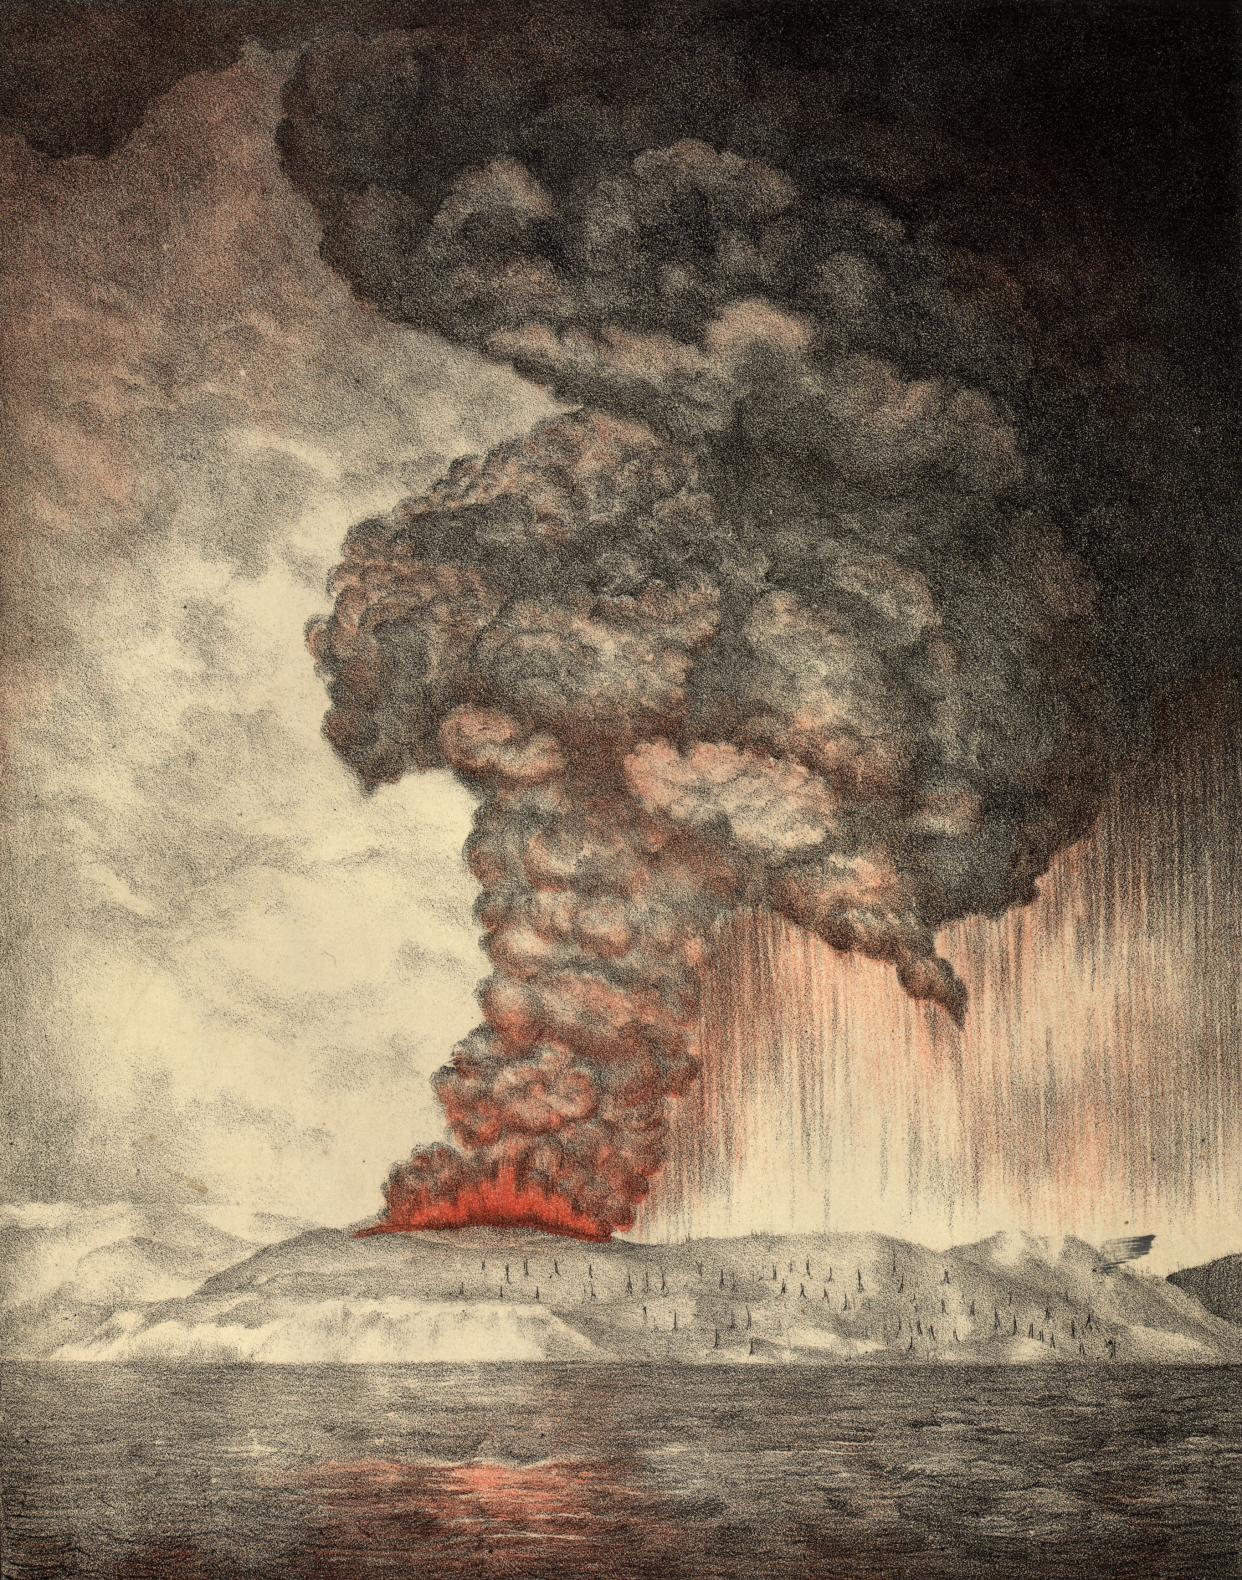 1883: Krakatoa, Indonesia